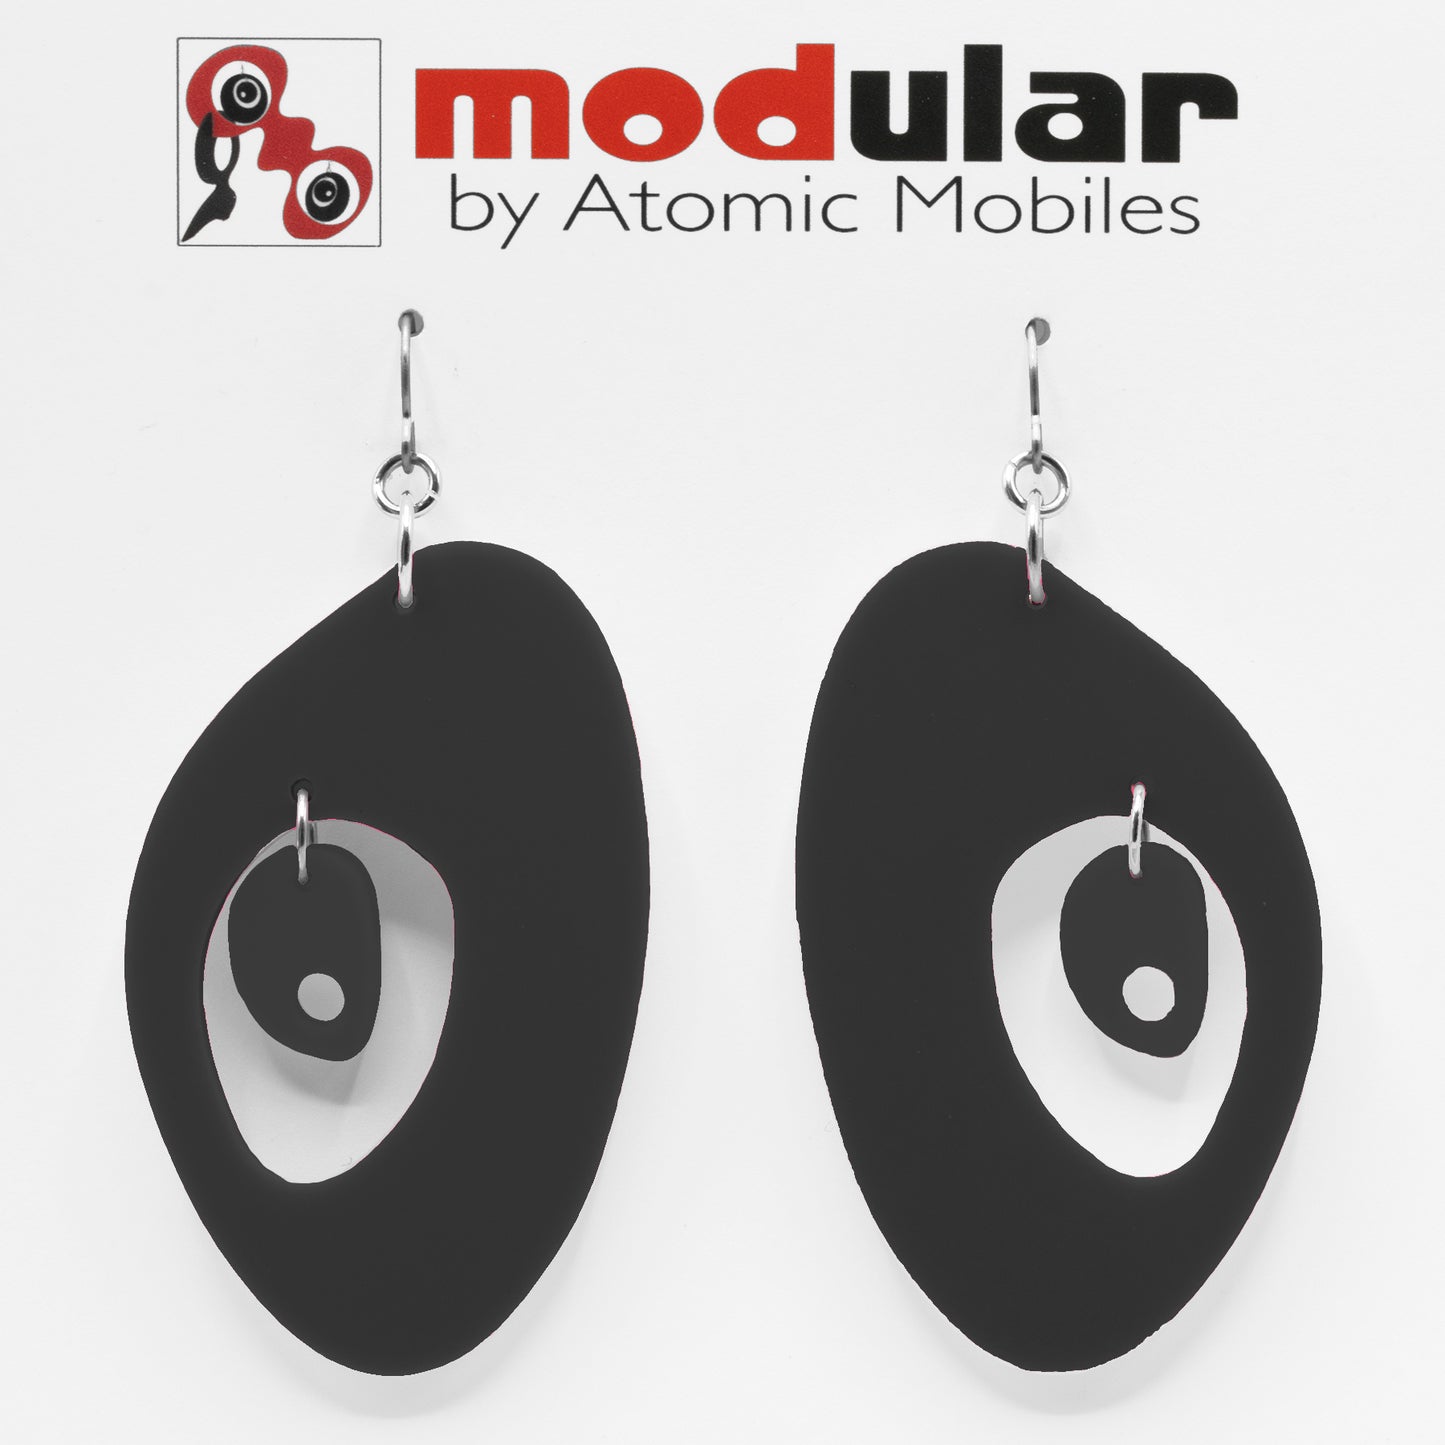 MODular Earrings - The Modernist Statement Earrings in Black by AtomicMobiles.com - retro era inspired mod handmade jewelry